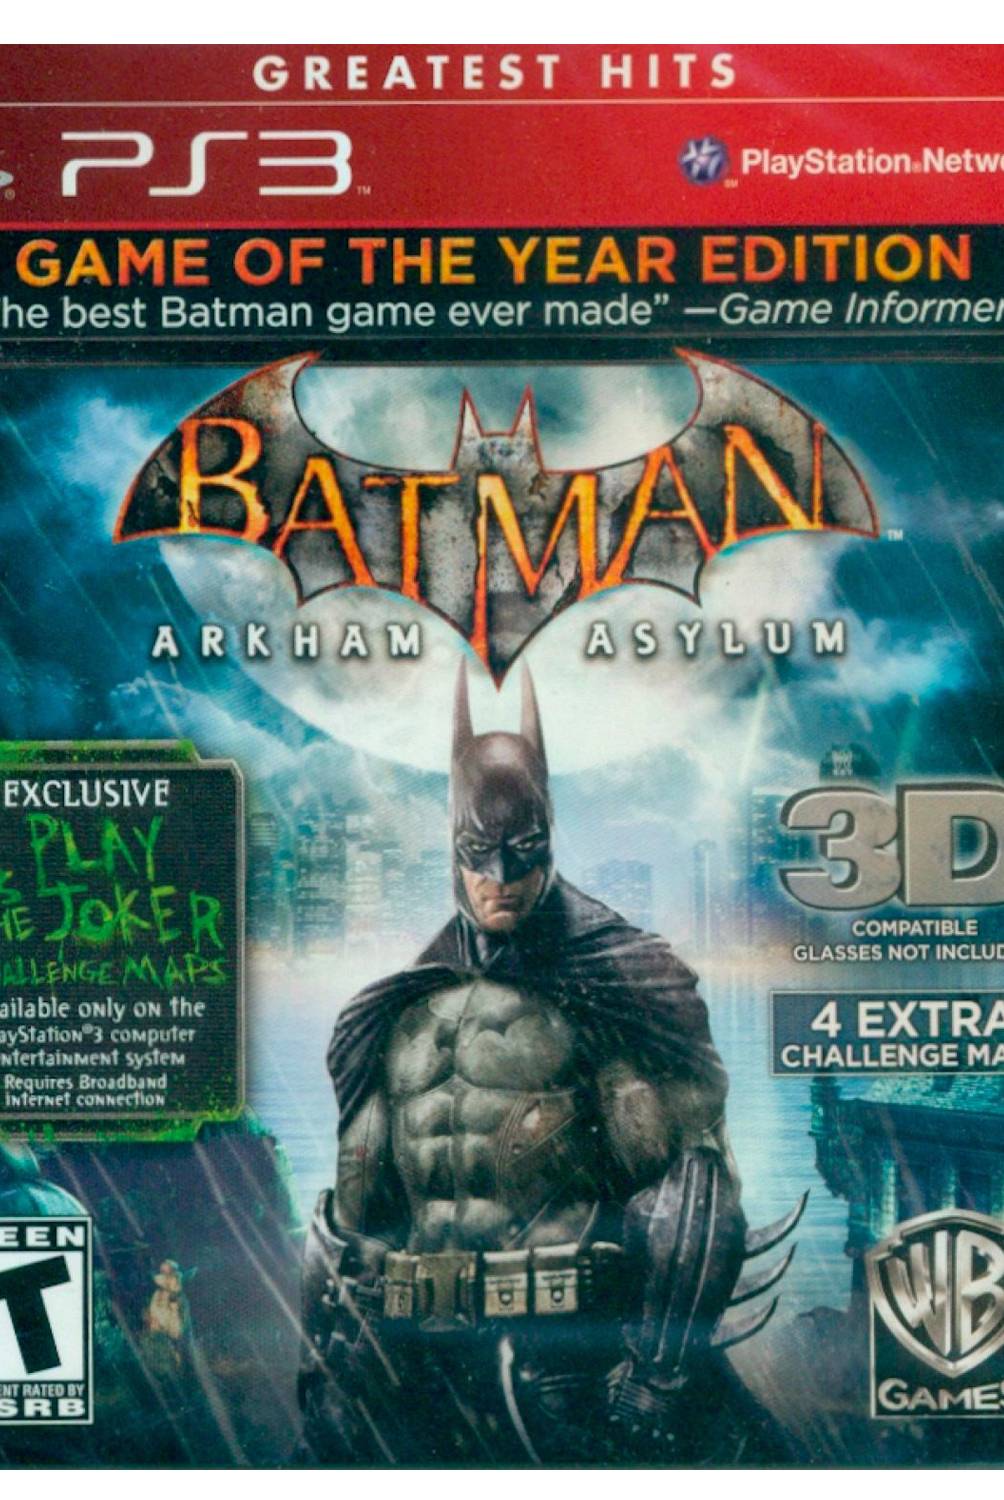 SONY - Batman Arkham Asylum Game Of The Year